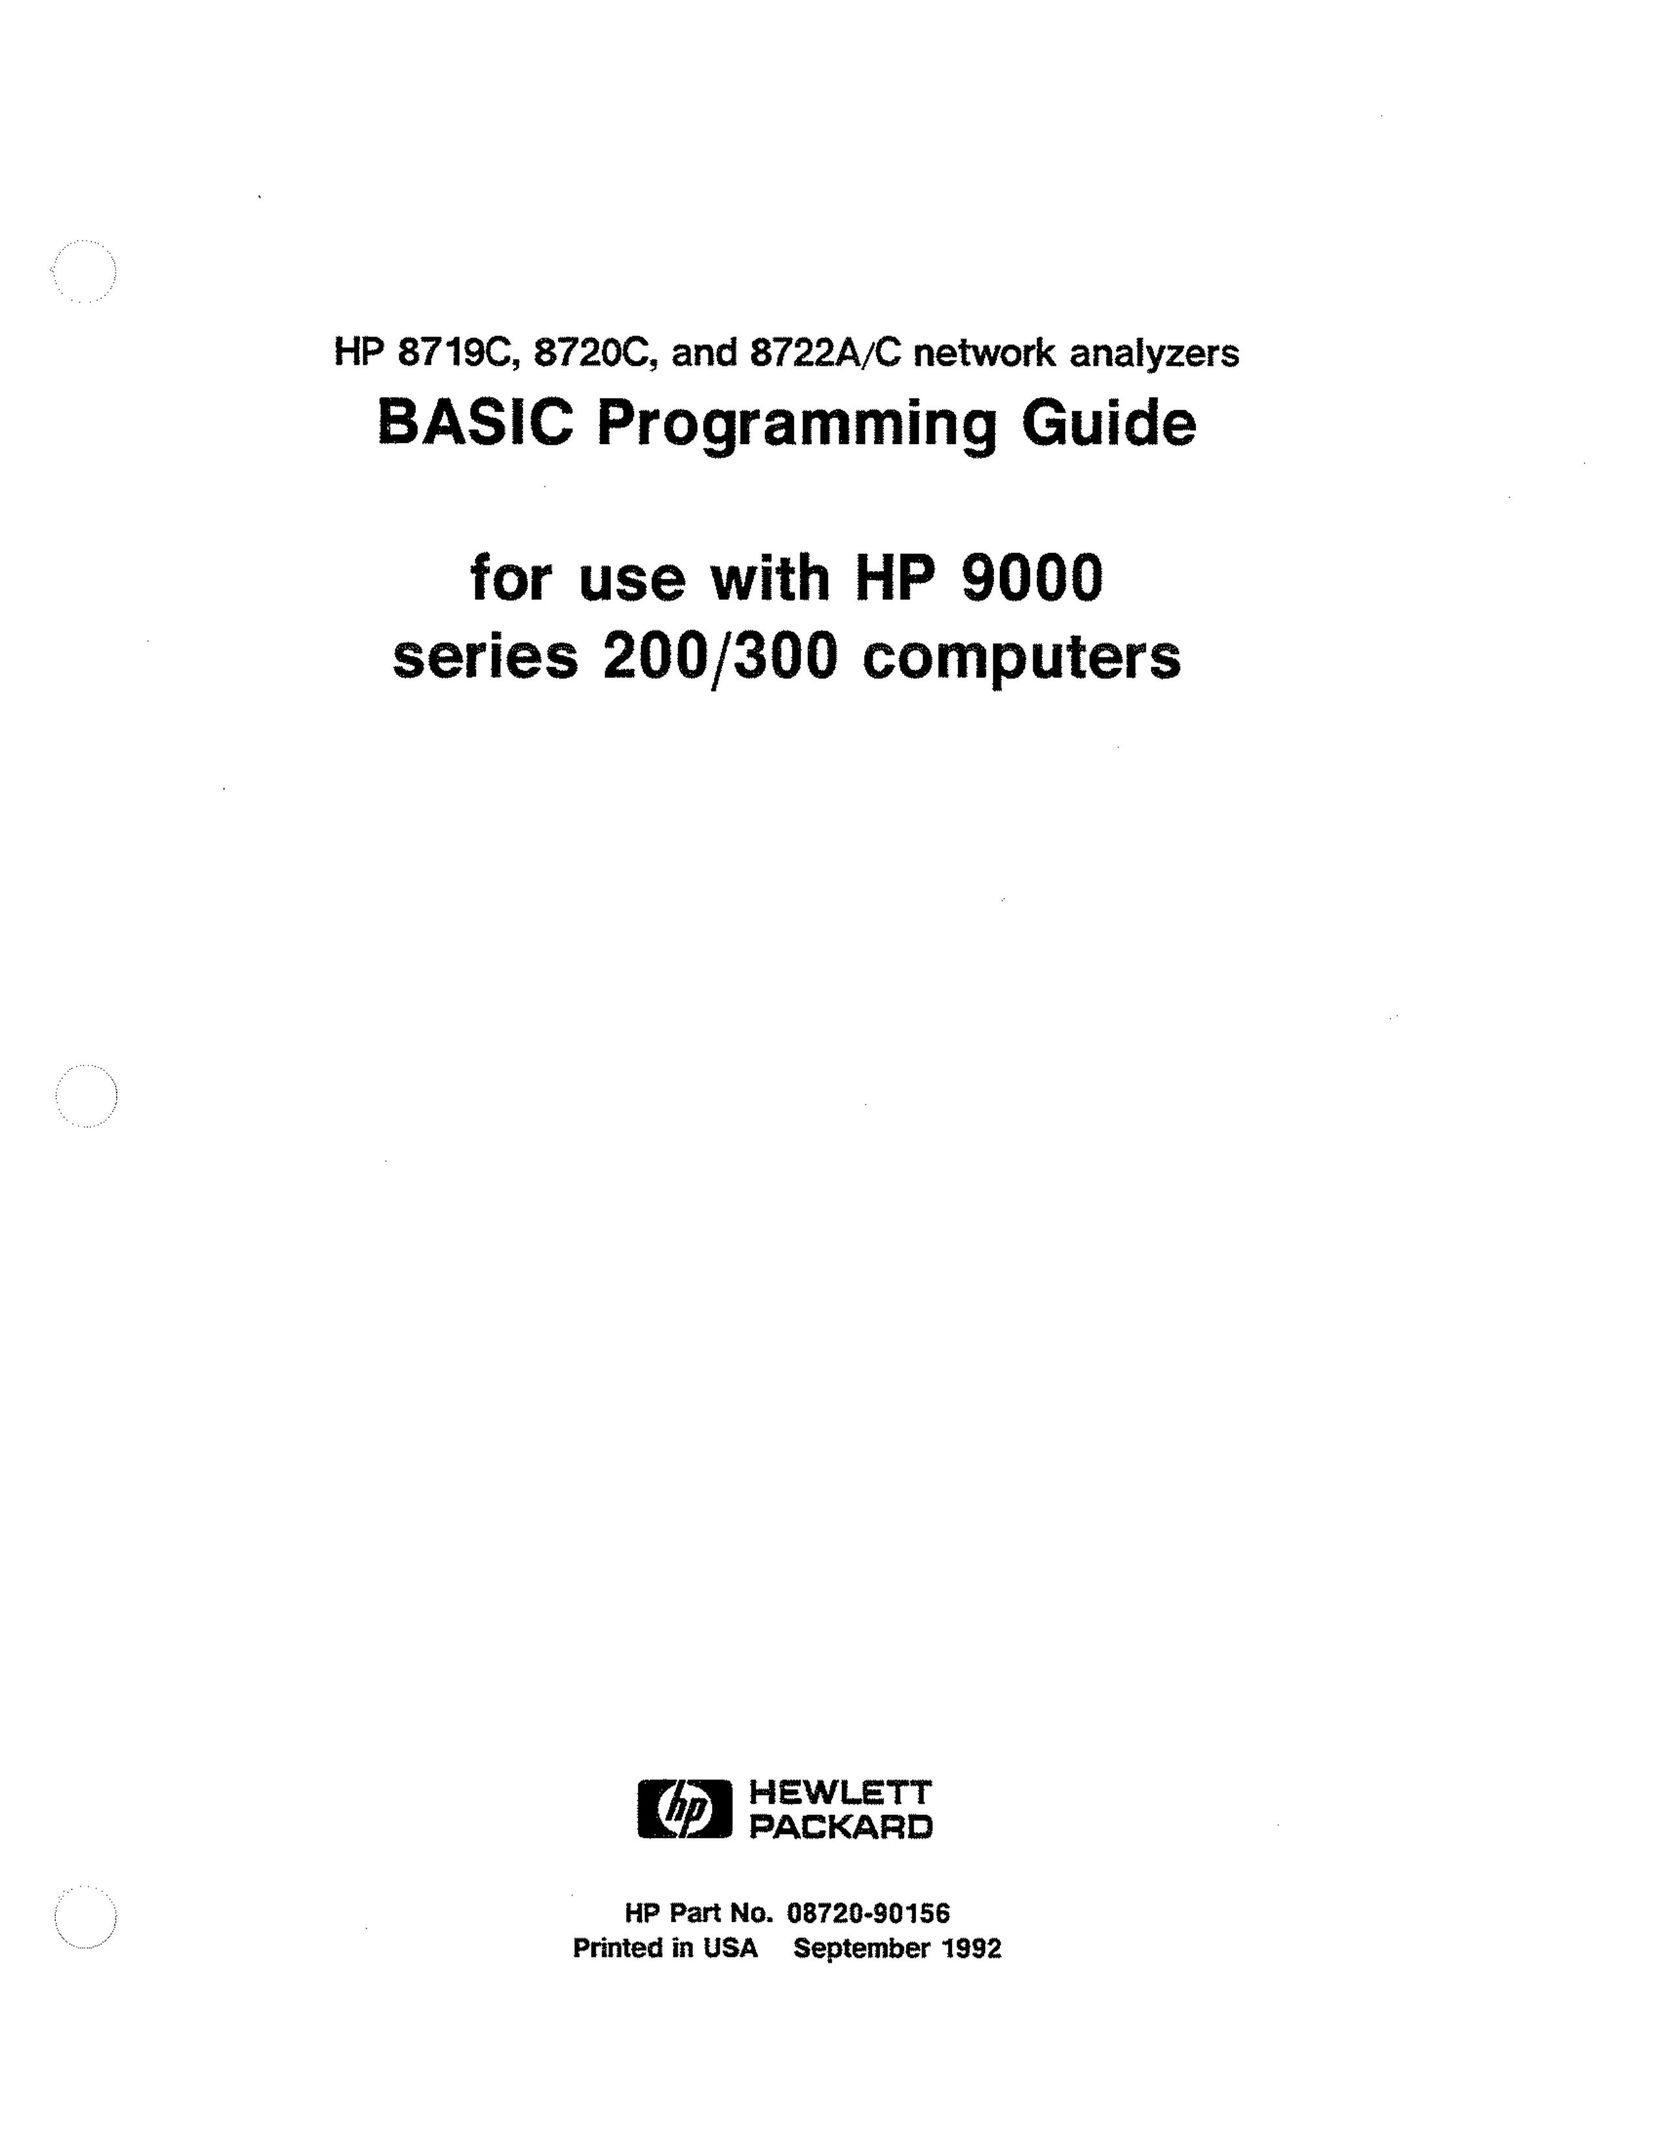 HP (Hewlett-Packard) HP 9000 SEREIS 200 Network Cables User Manual